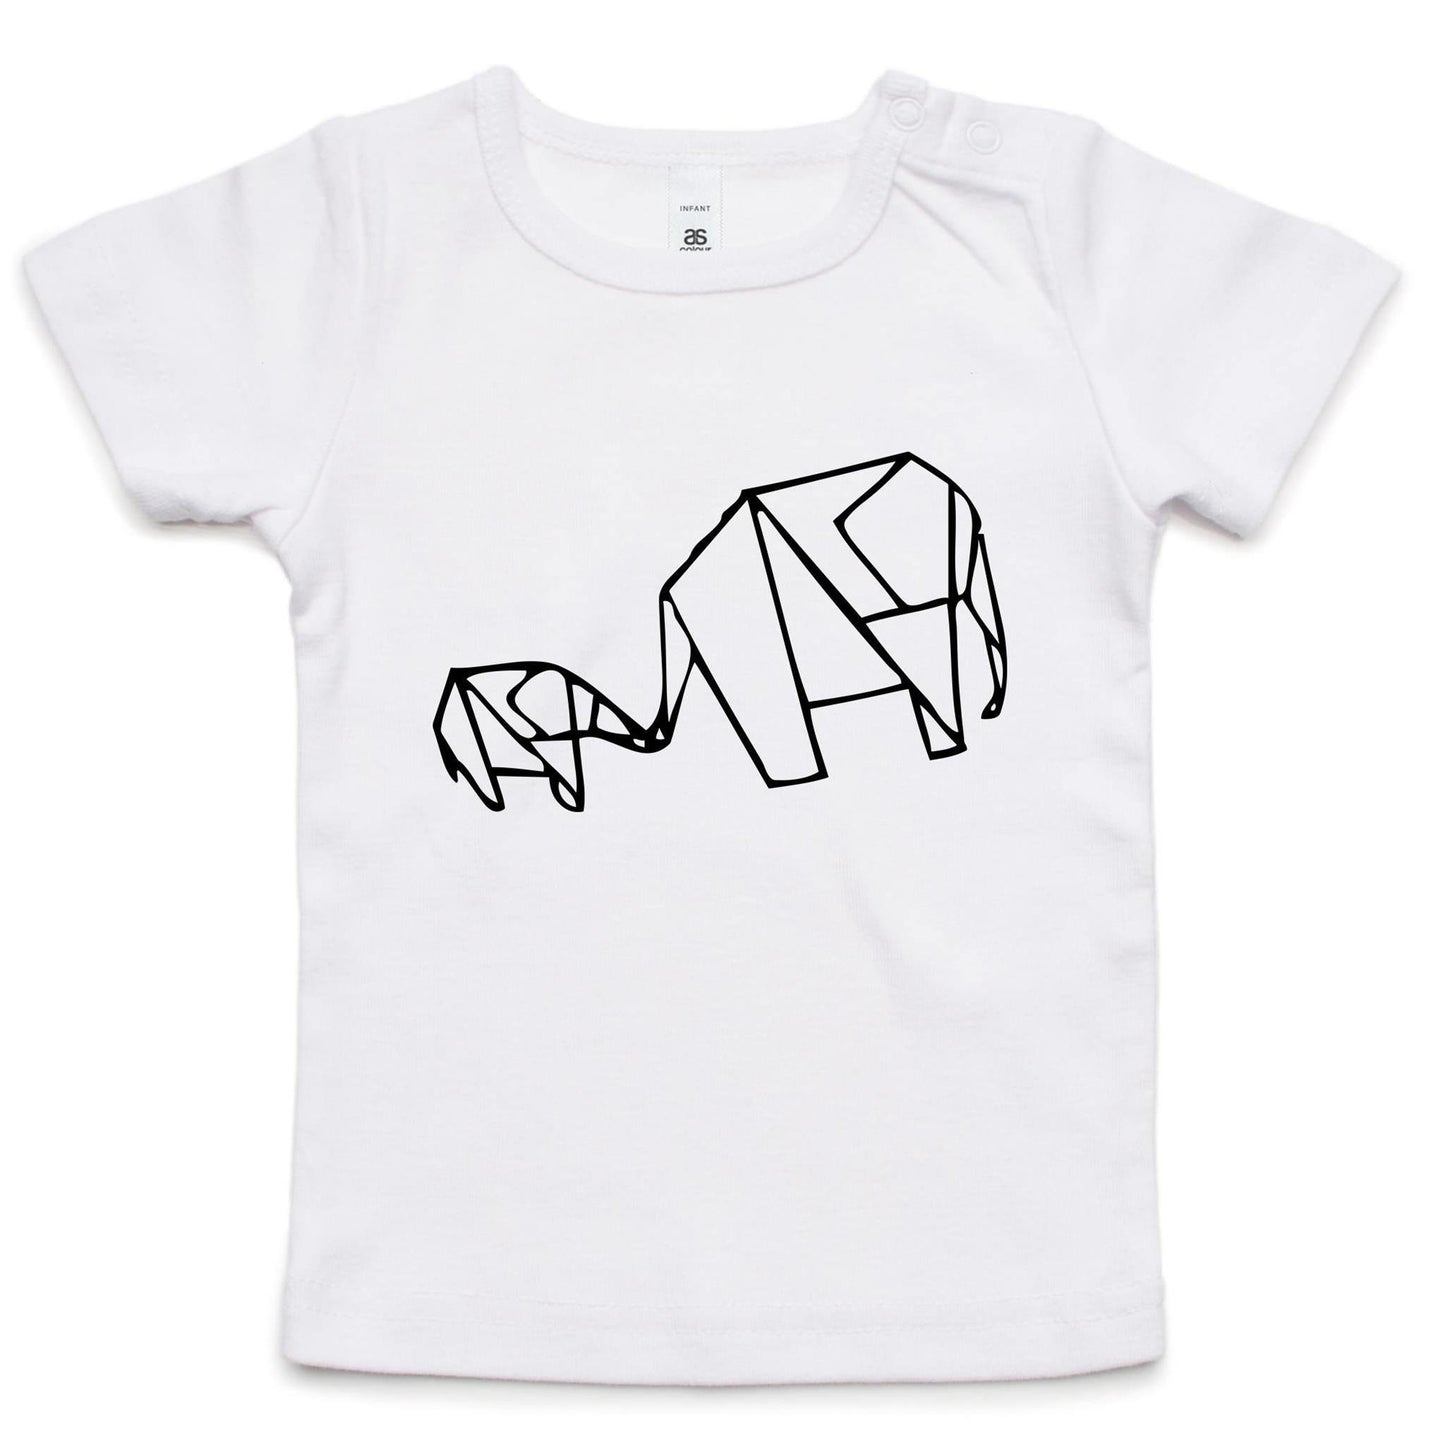 Origami Elephants - Baby T-shirt White Baby T-shirt kids